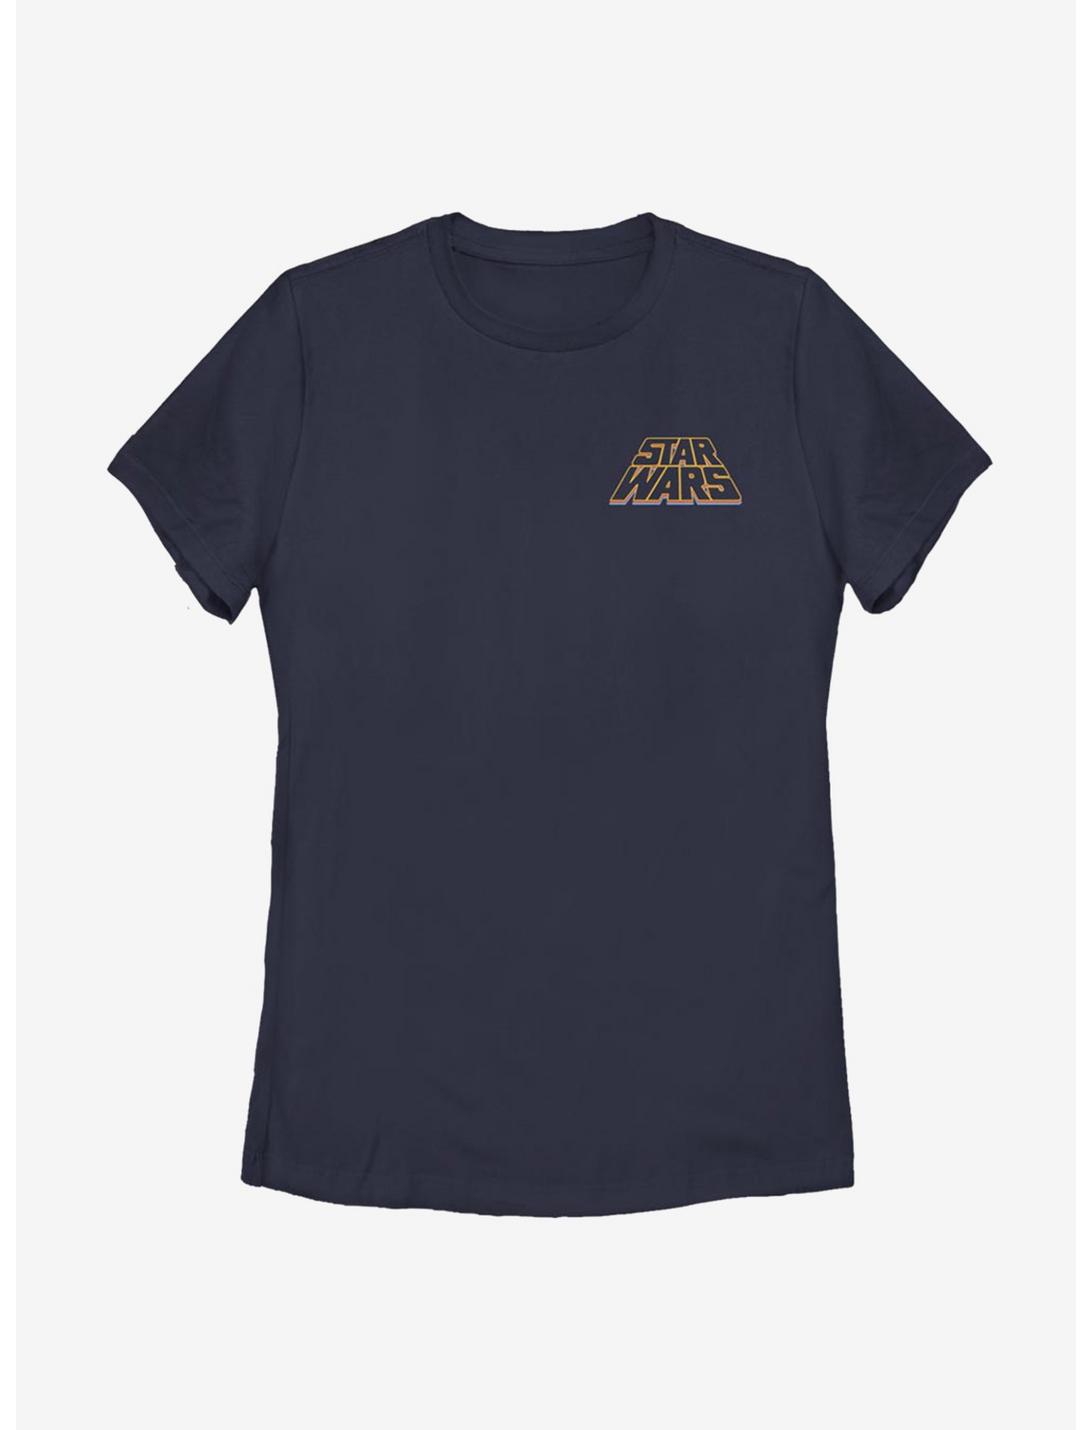 Star Wars Slant Lines Pocket Logo Womens T-Shirt, NAVY, hi-res